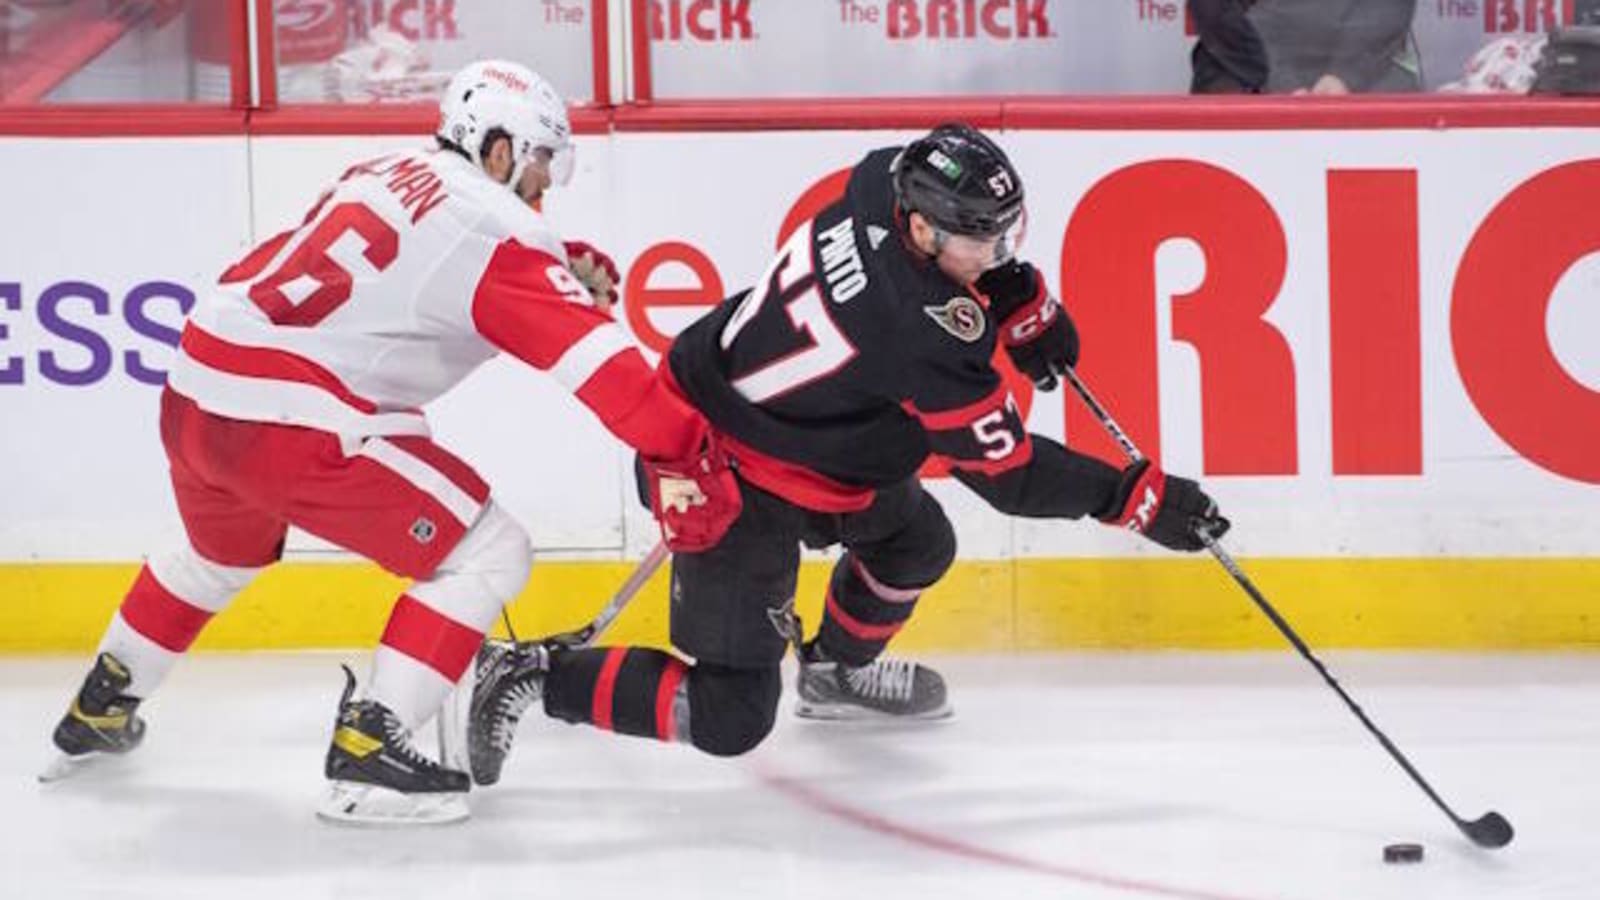 NHL Rumors: The Ottawa Senators and RFA Shane Pinto